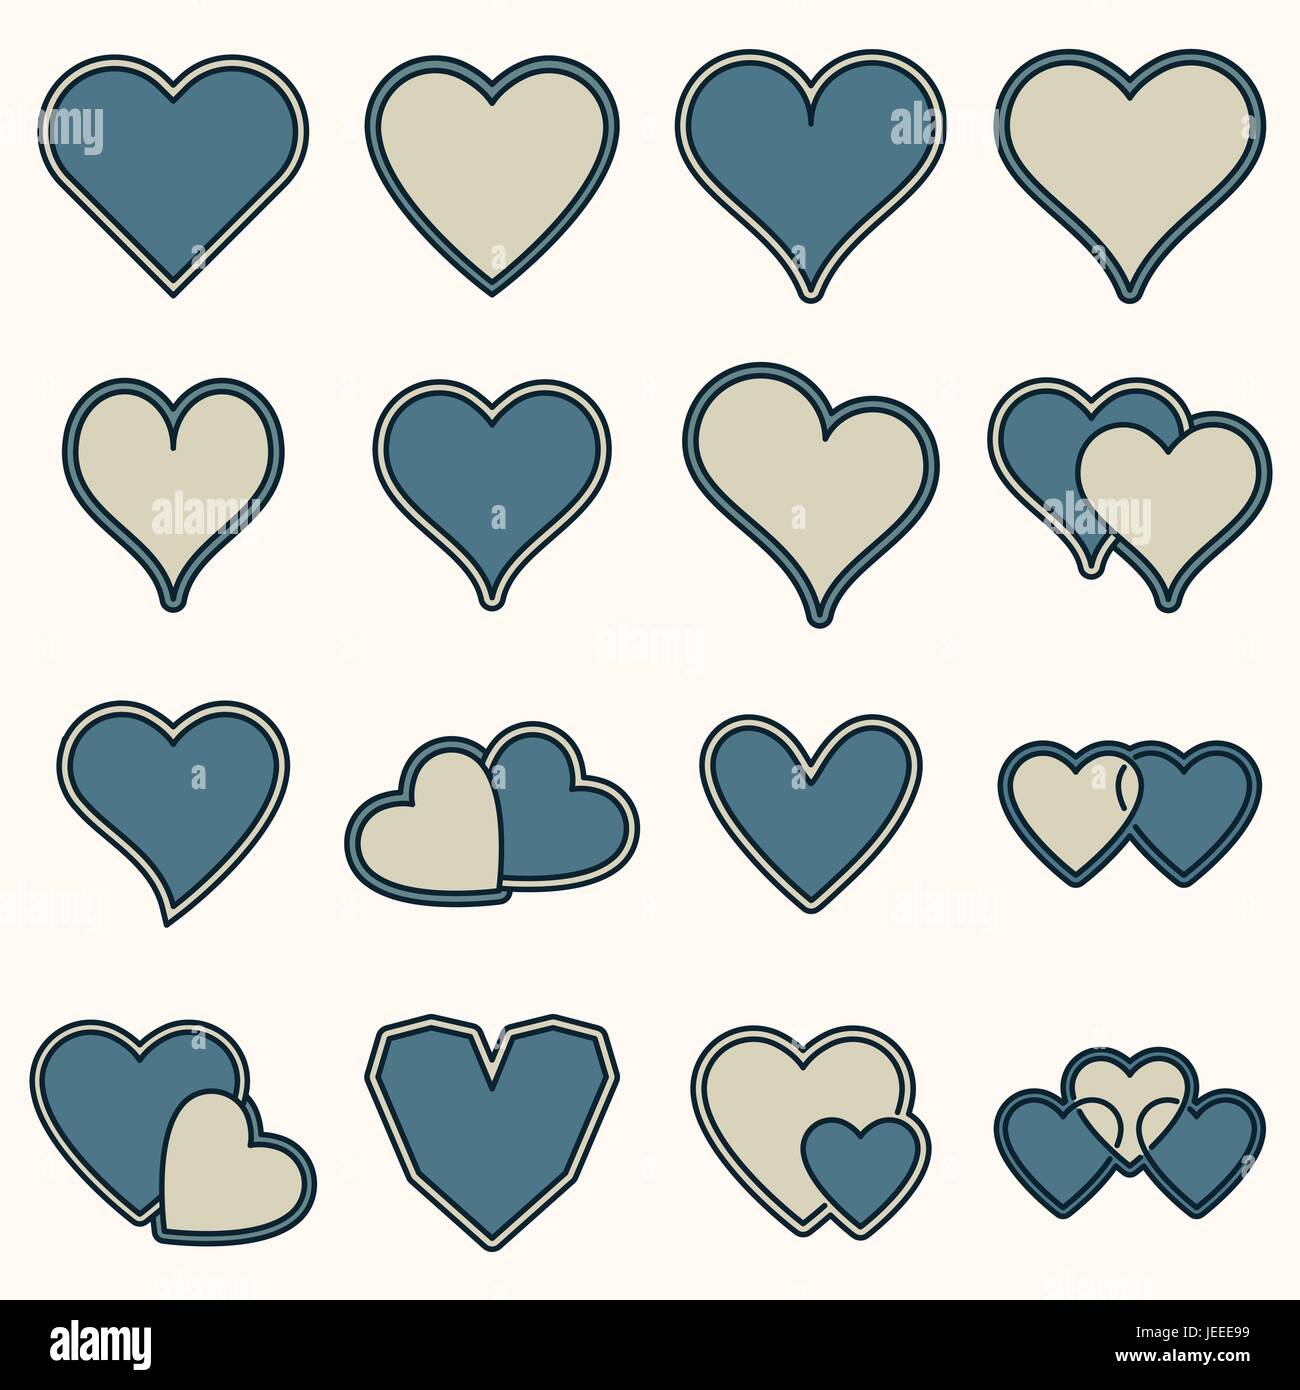 Heart shape icons against white background Stock Vector